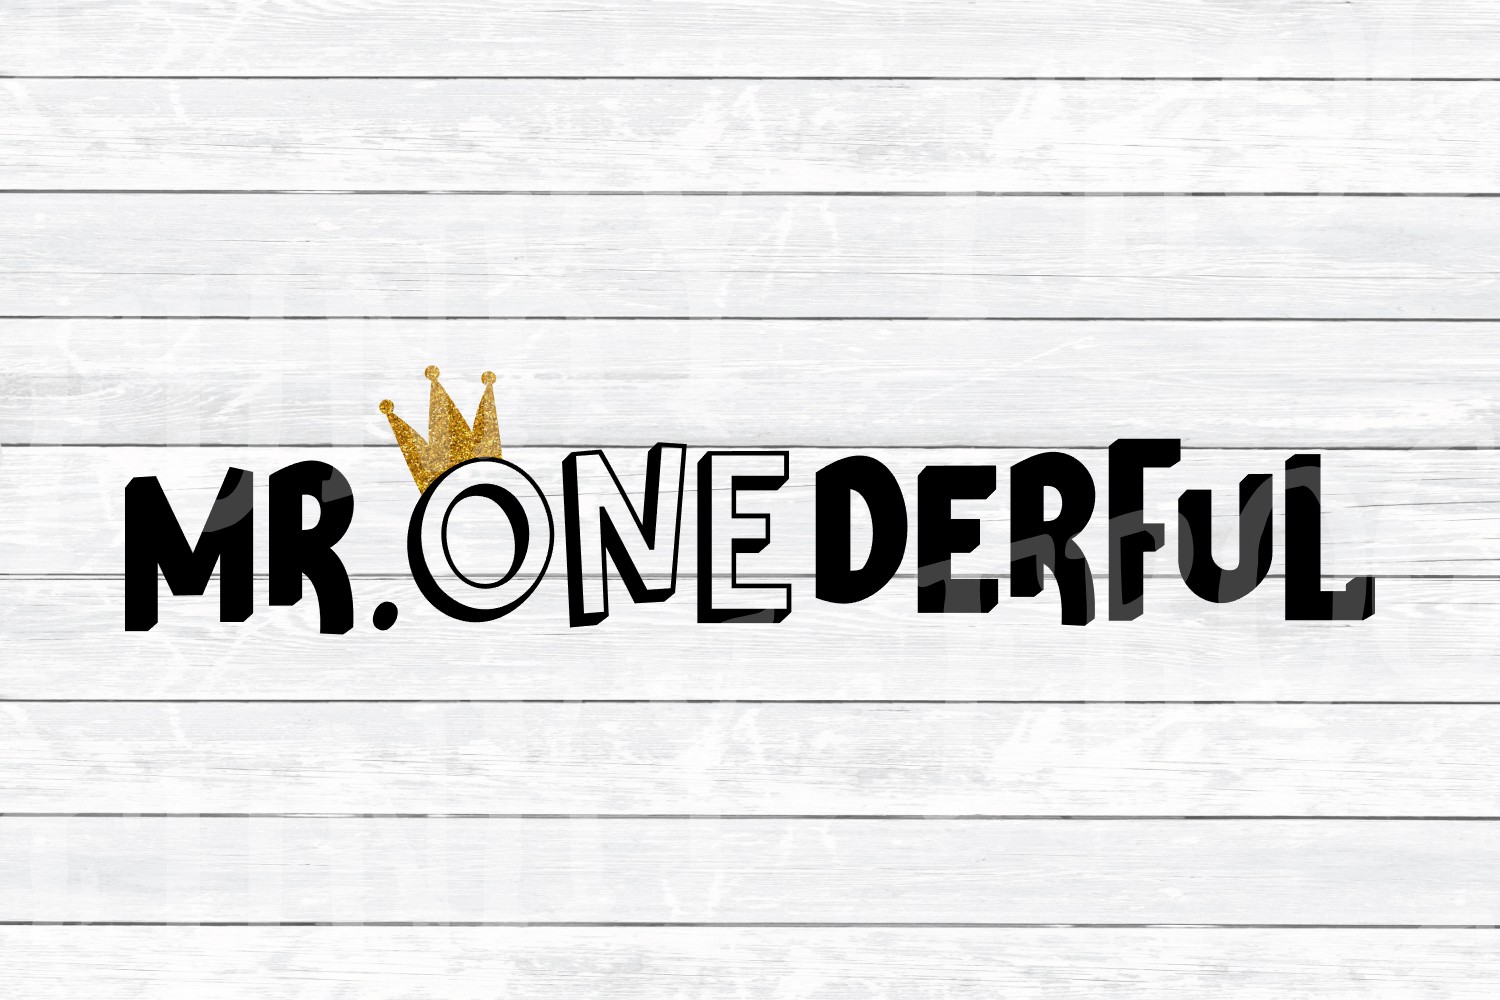 Download Mr. One Derful - First Birthday SVG Cut File